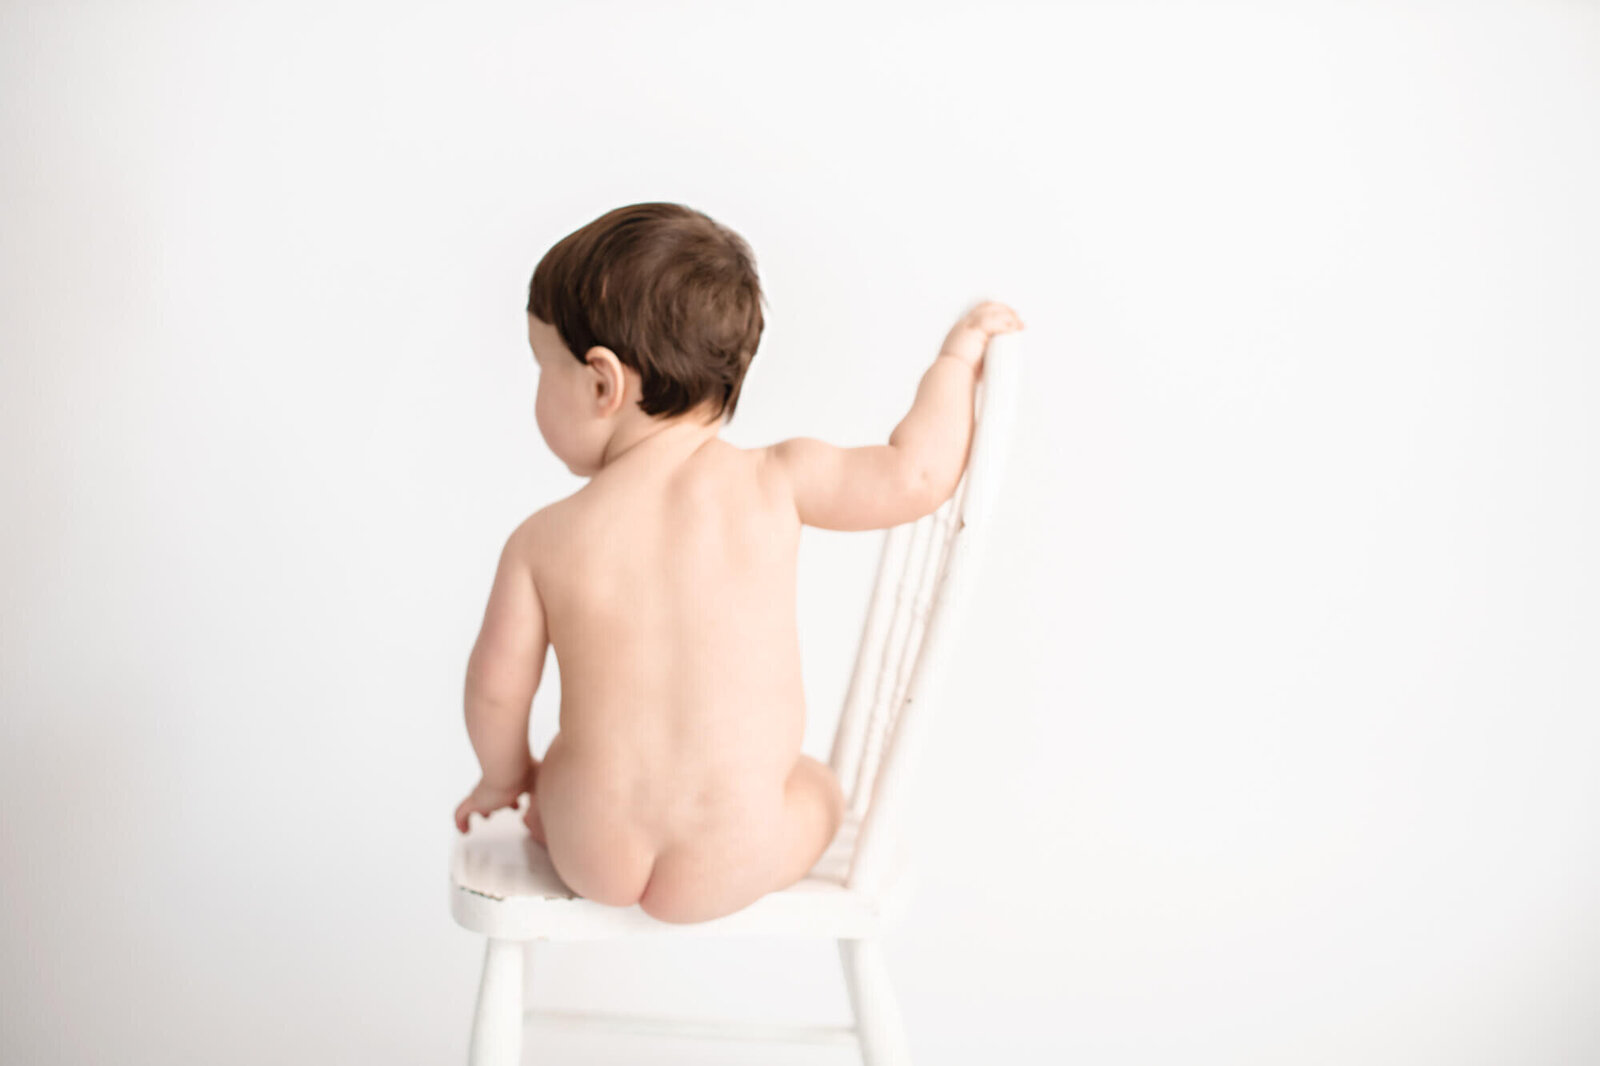 Baby boy in white background sitting on chair